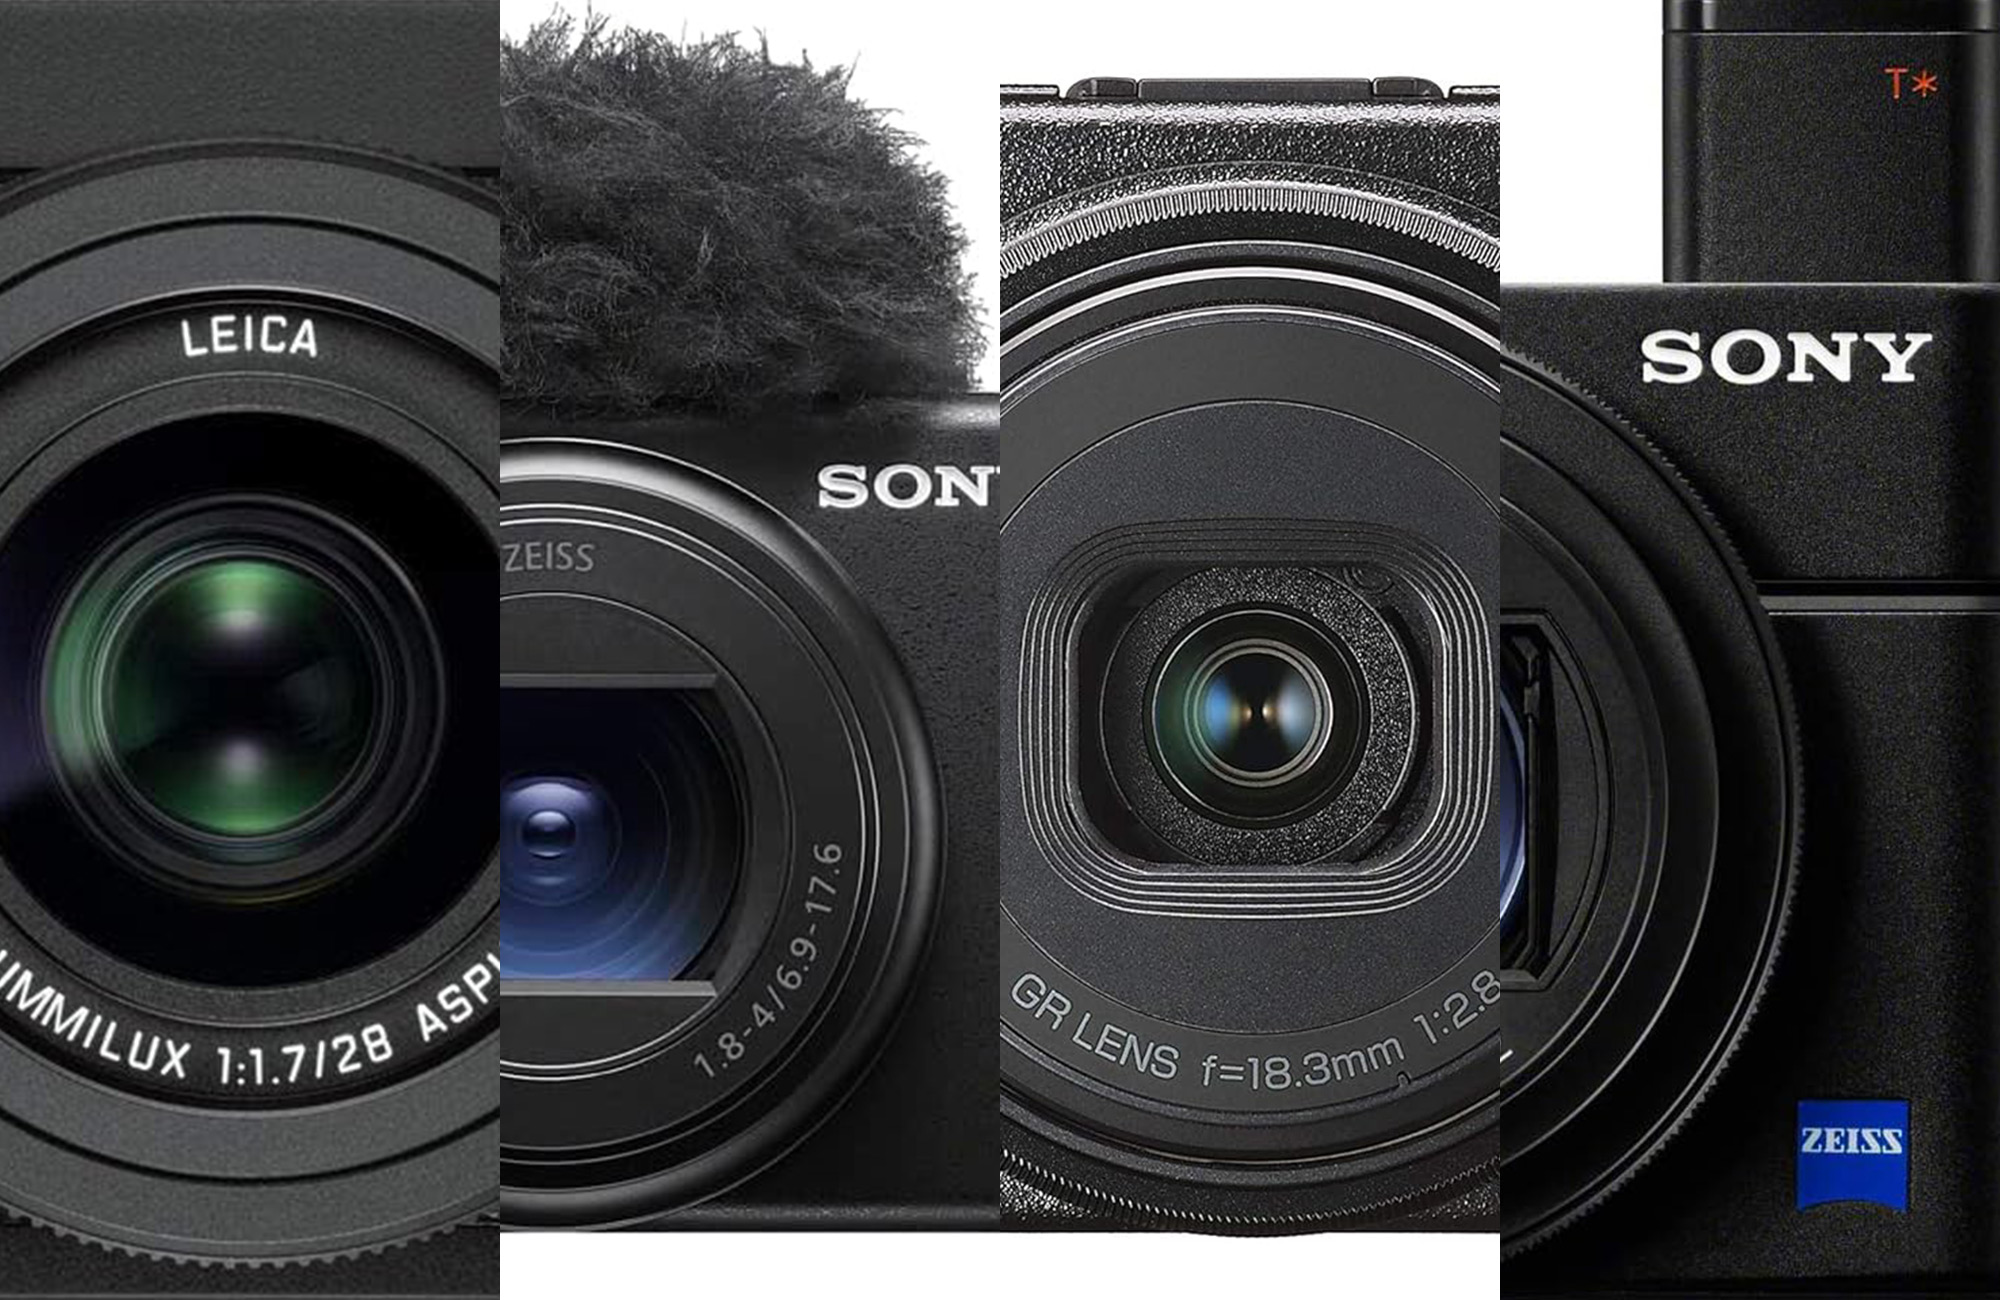 Sony Compact Digital Camera, Sony Compact Photo Cameras